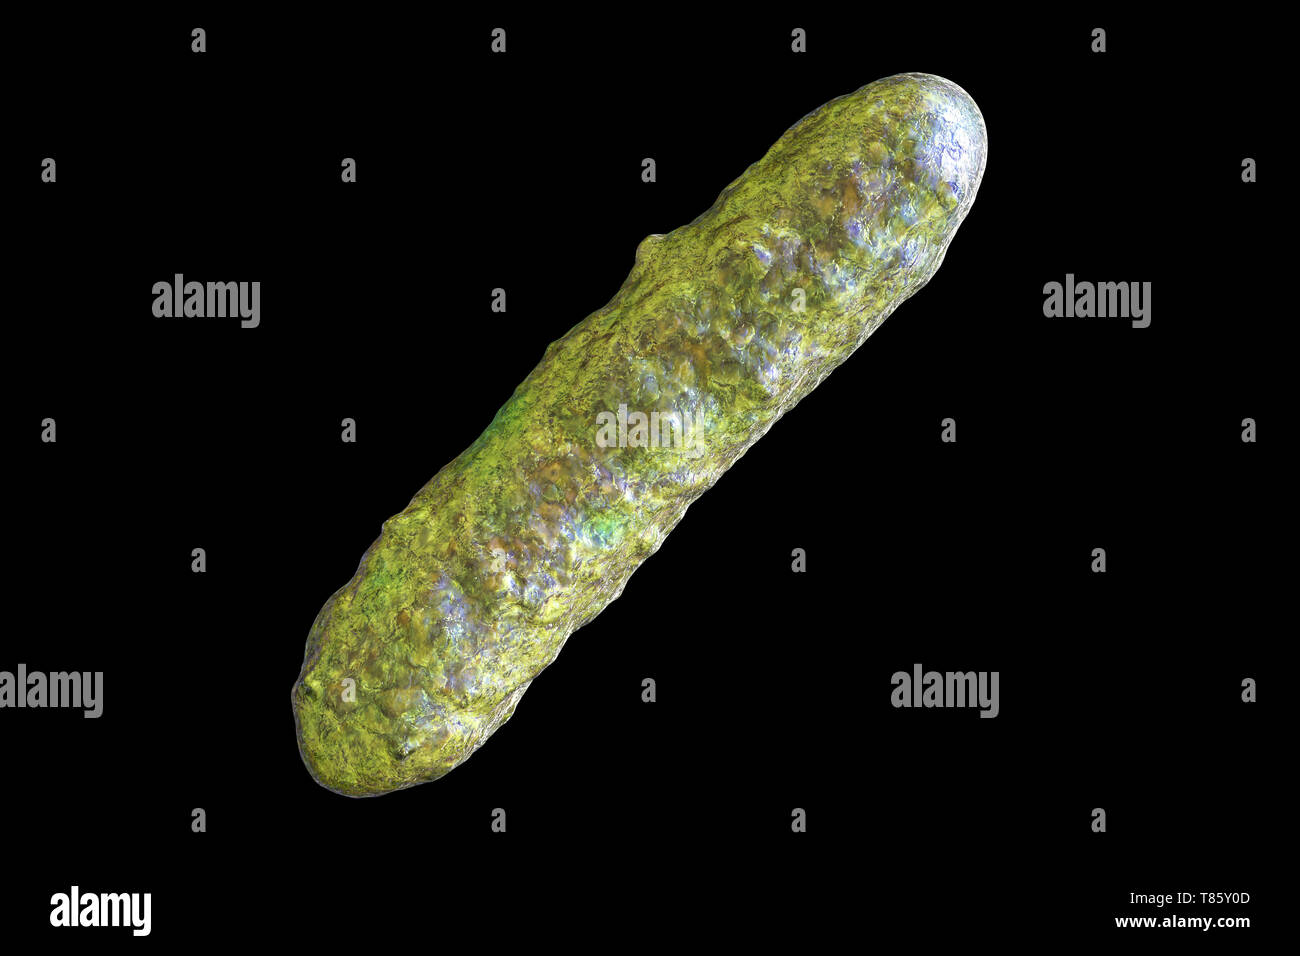 Bacterium, illustration Stock Photo